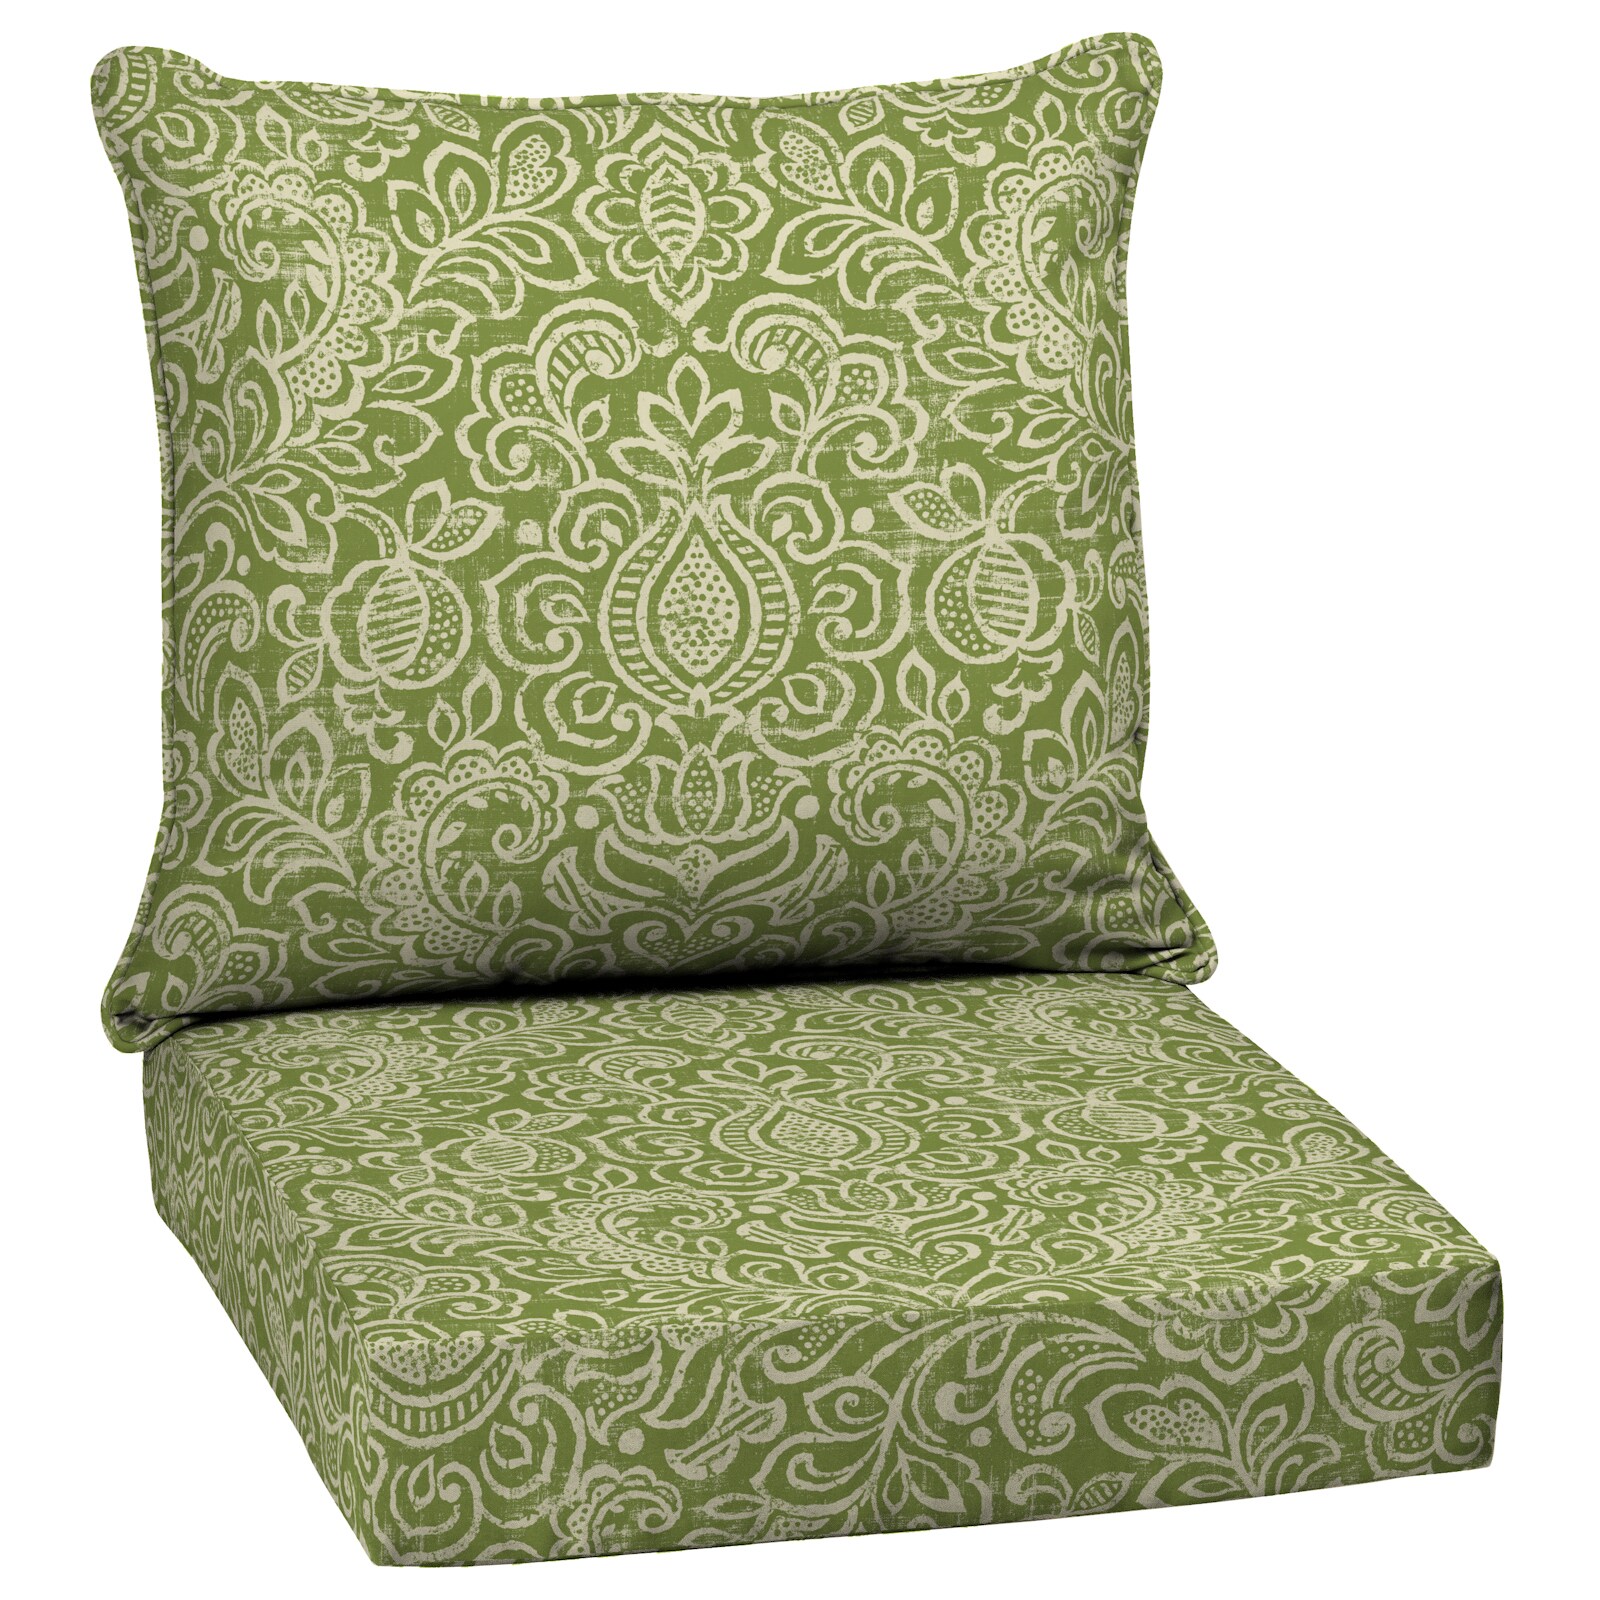 Deep Seat Patio Chair Cushion, Garden Treasures Deep Seat Cushions